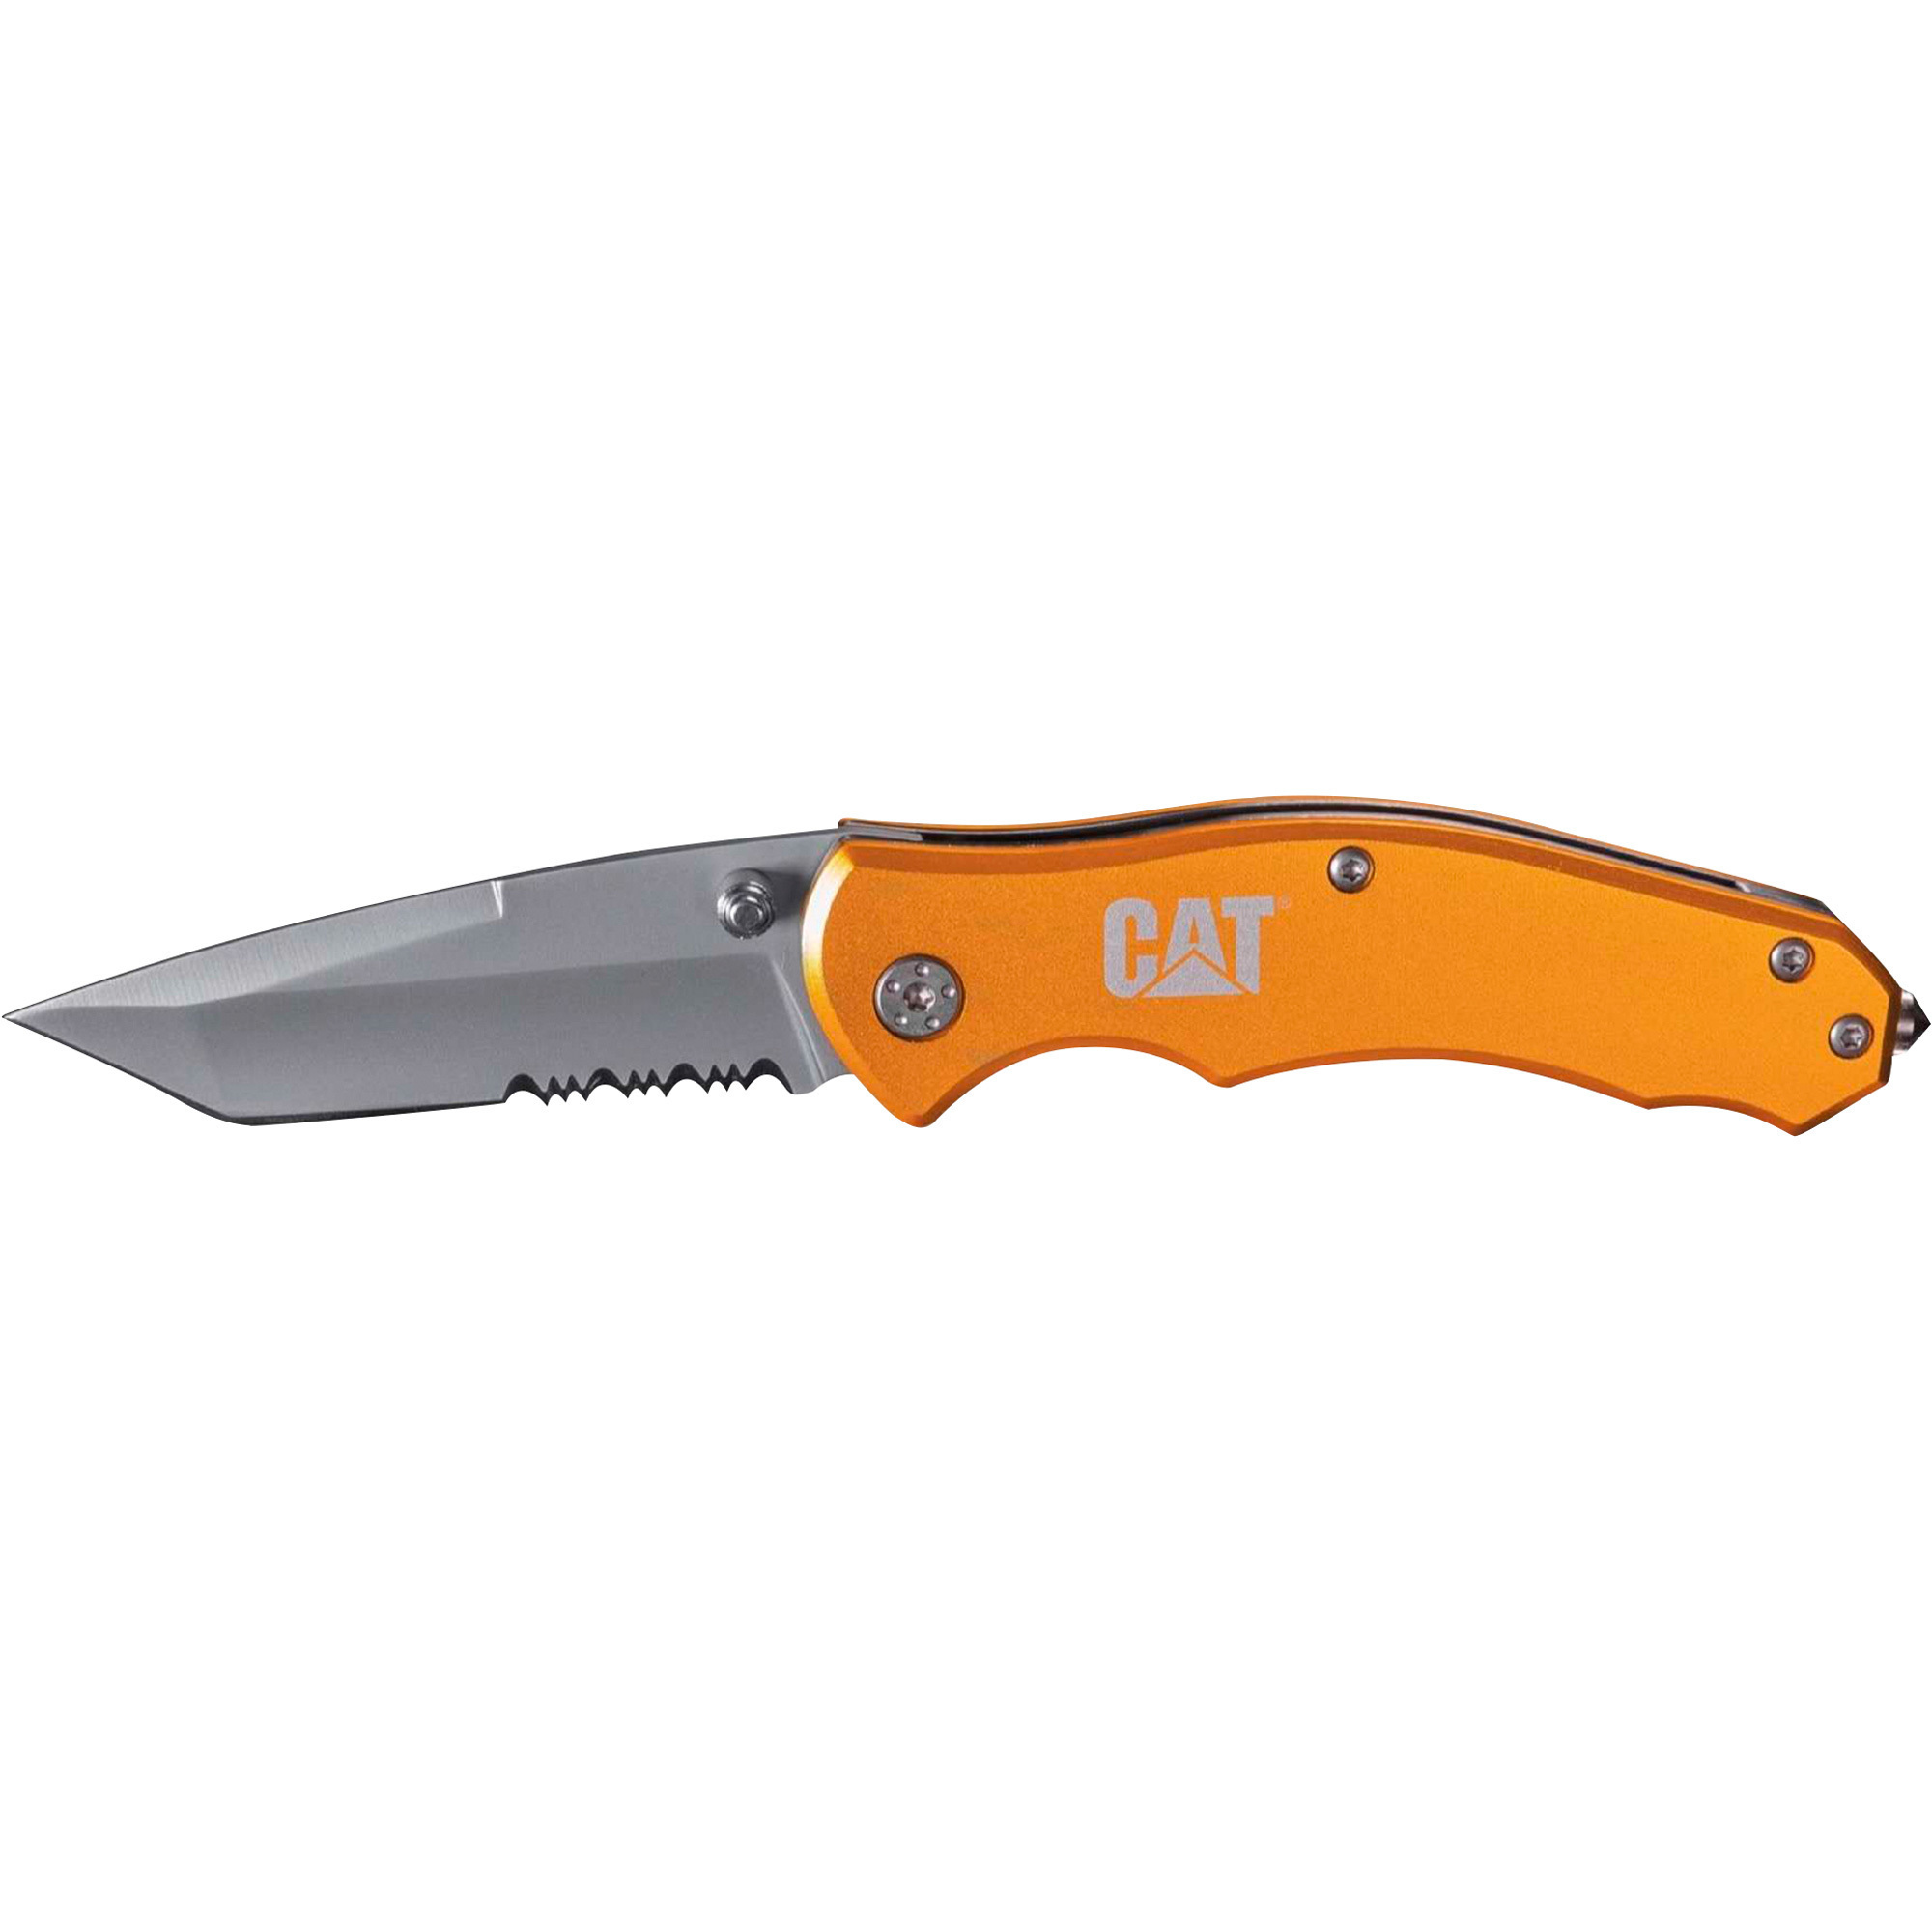 CAT Serrated Tanto Folding Knife, 6Inch L, Model 980011